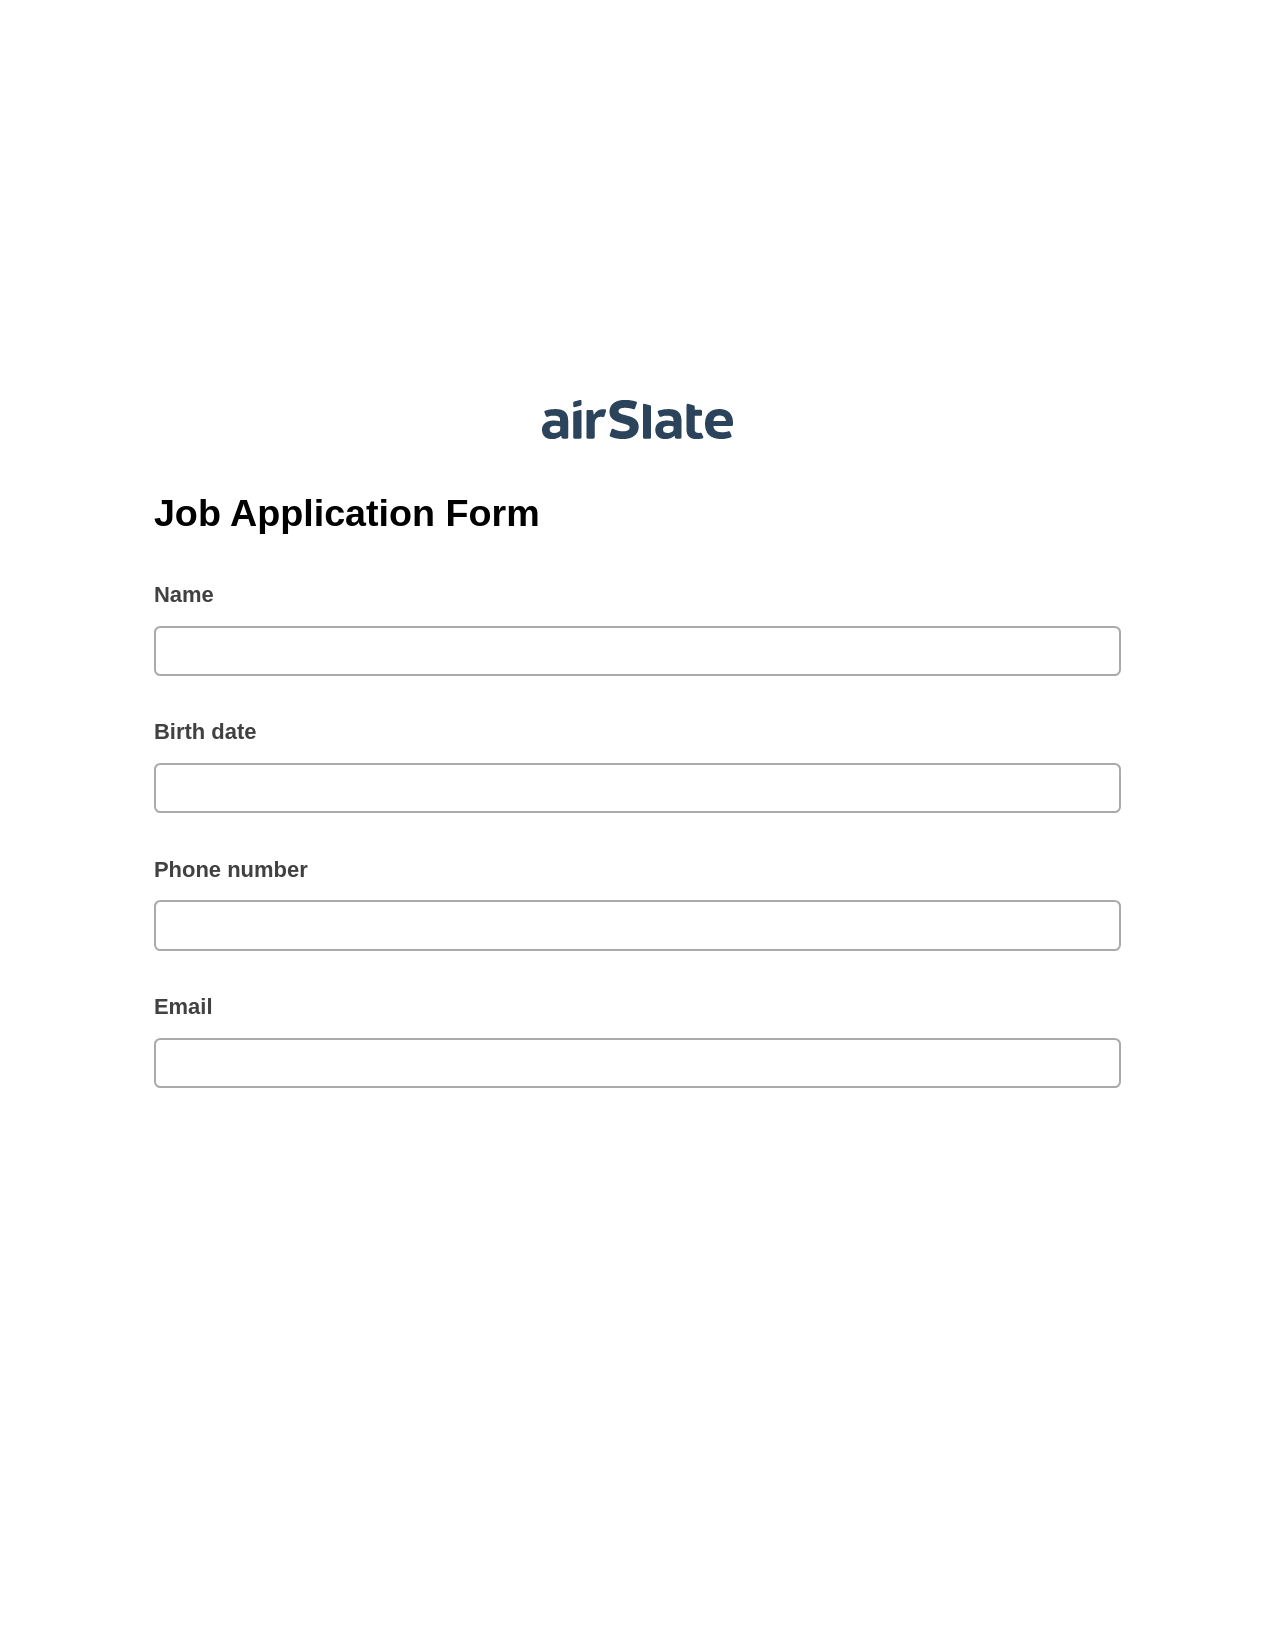 Multirole Job Application Form Pre-fill from MySQL Bot, Update NetSuite Records Bot, Archive to SharePoint Folder Bot